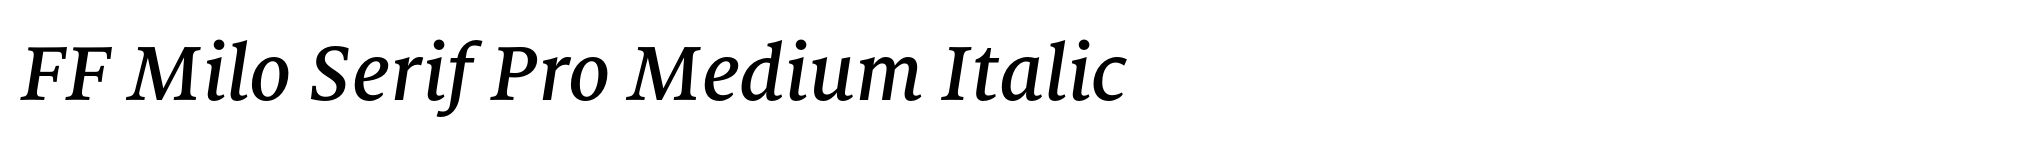 FF Milo Serif Pro Medium Italic image